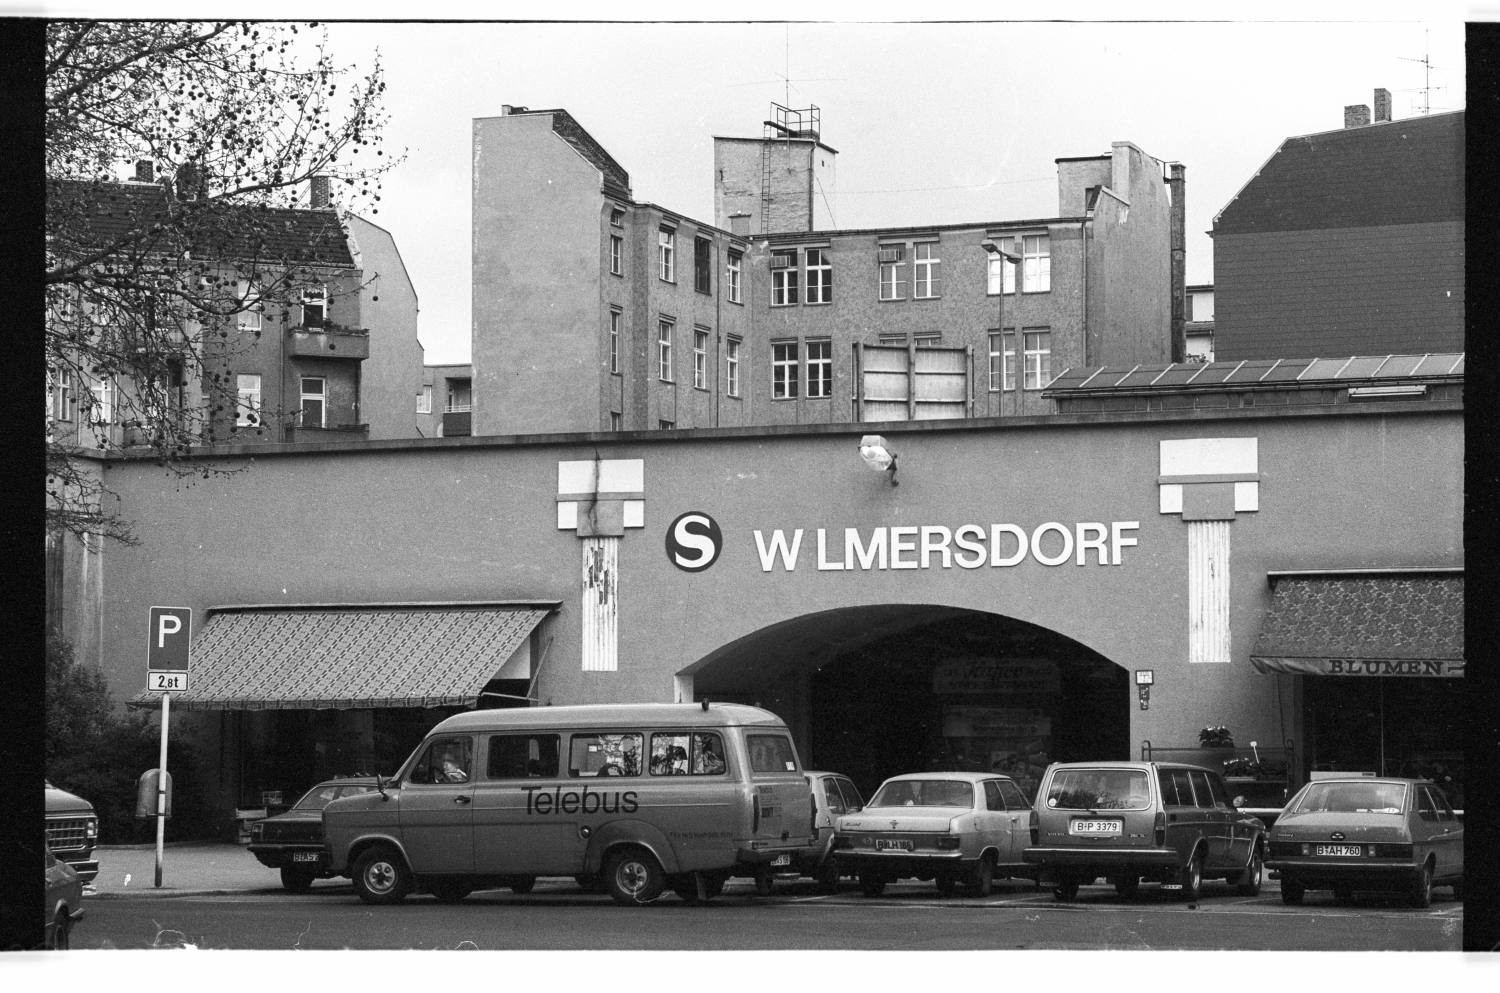 Kleinbildnegative: S-Bahnhof Wilmersdorf, 1981 (Museen Tempelhof-Schöneberg/Jürgen Henschel RR-F)